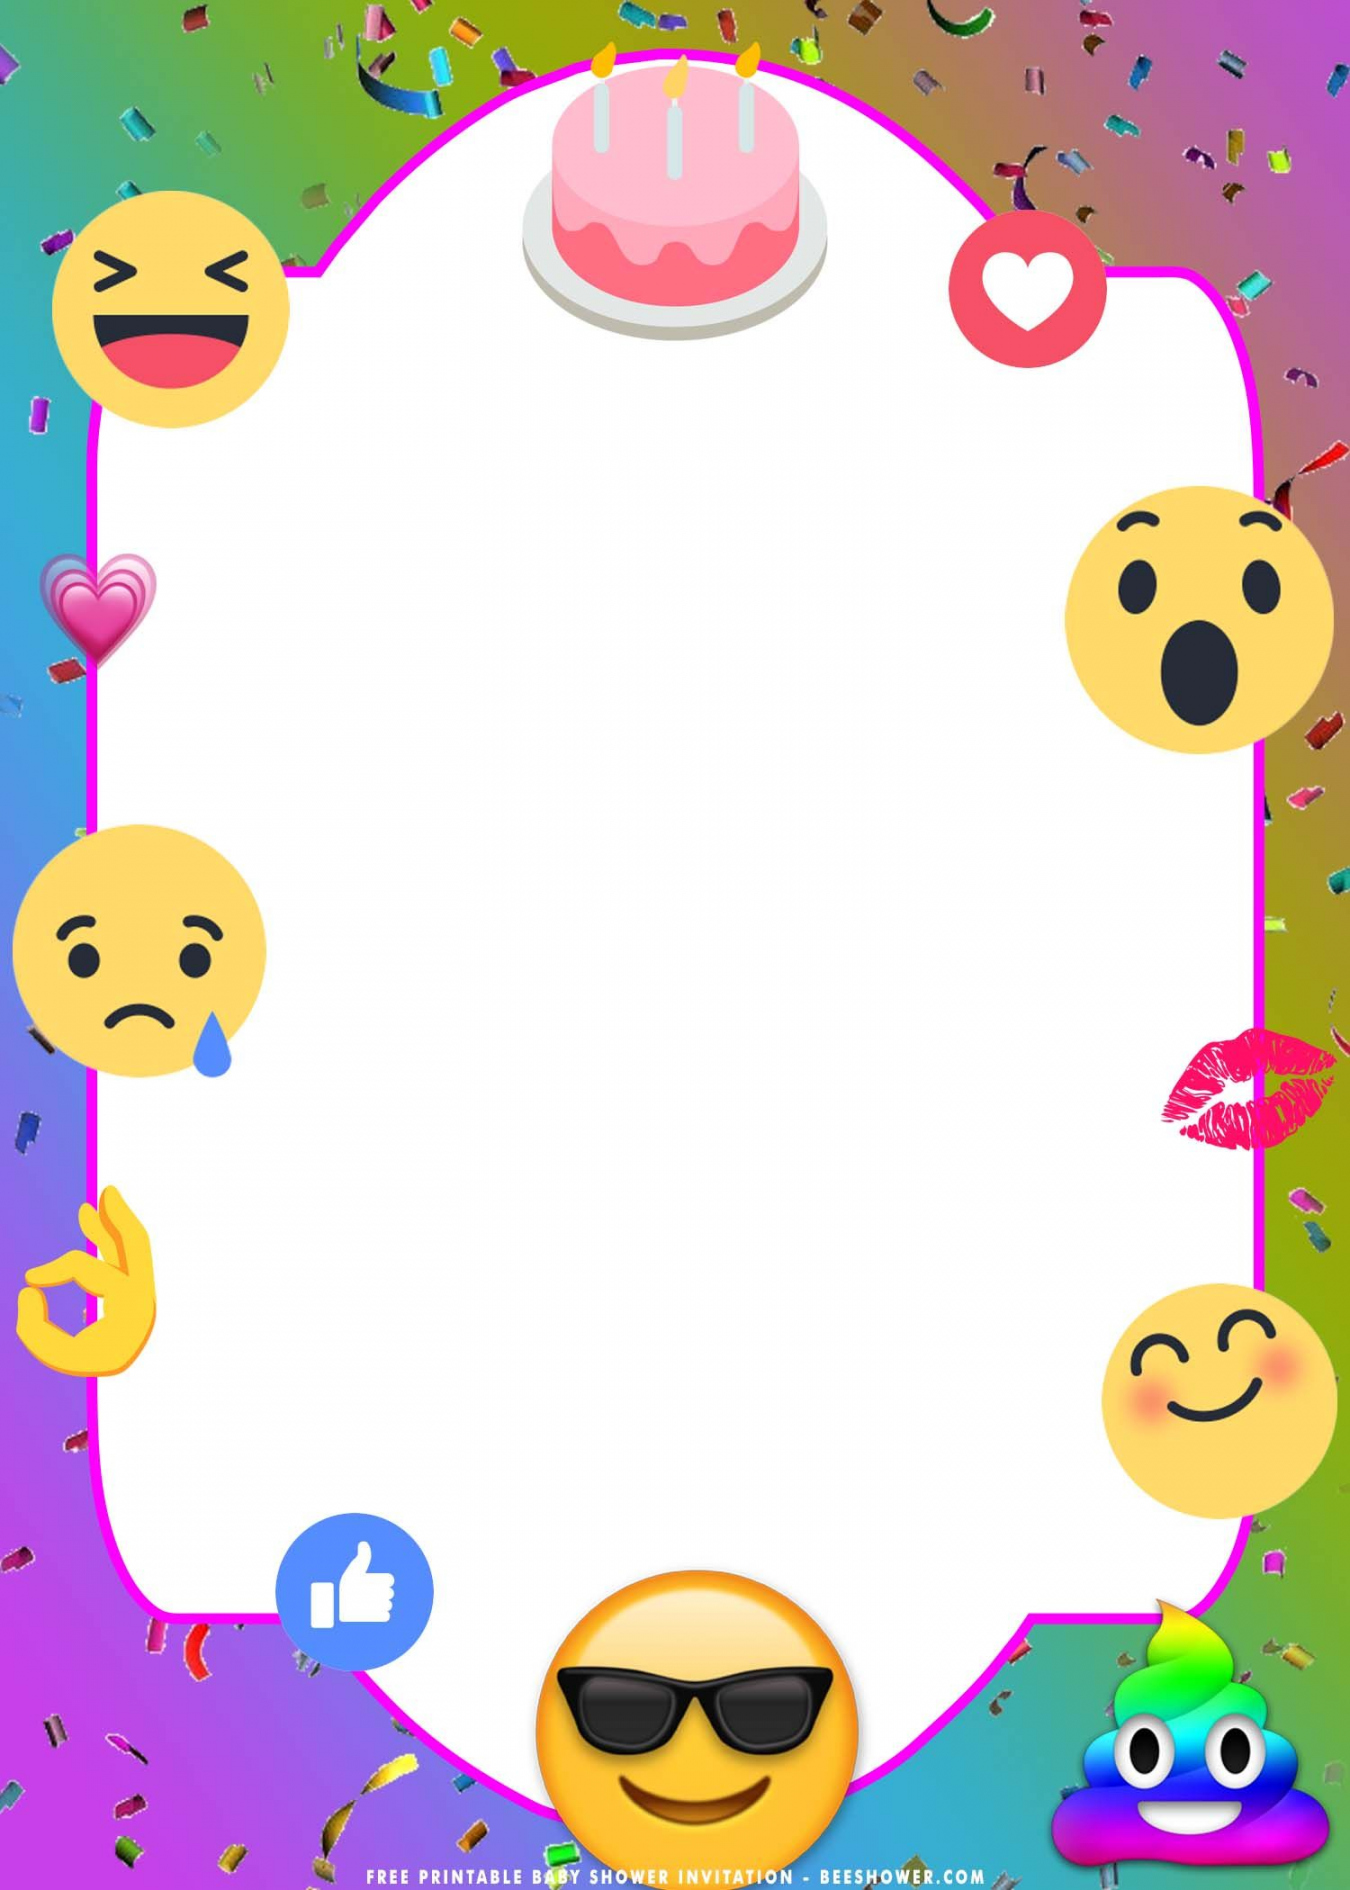 FREE Printable) - Cute Emoji Birthday Party Invitation Templates  - FREE Printables - Free Printable Emoji B Day Invites